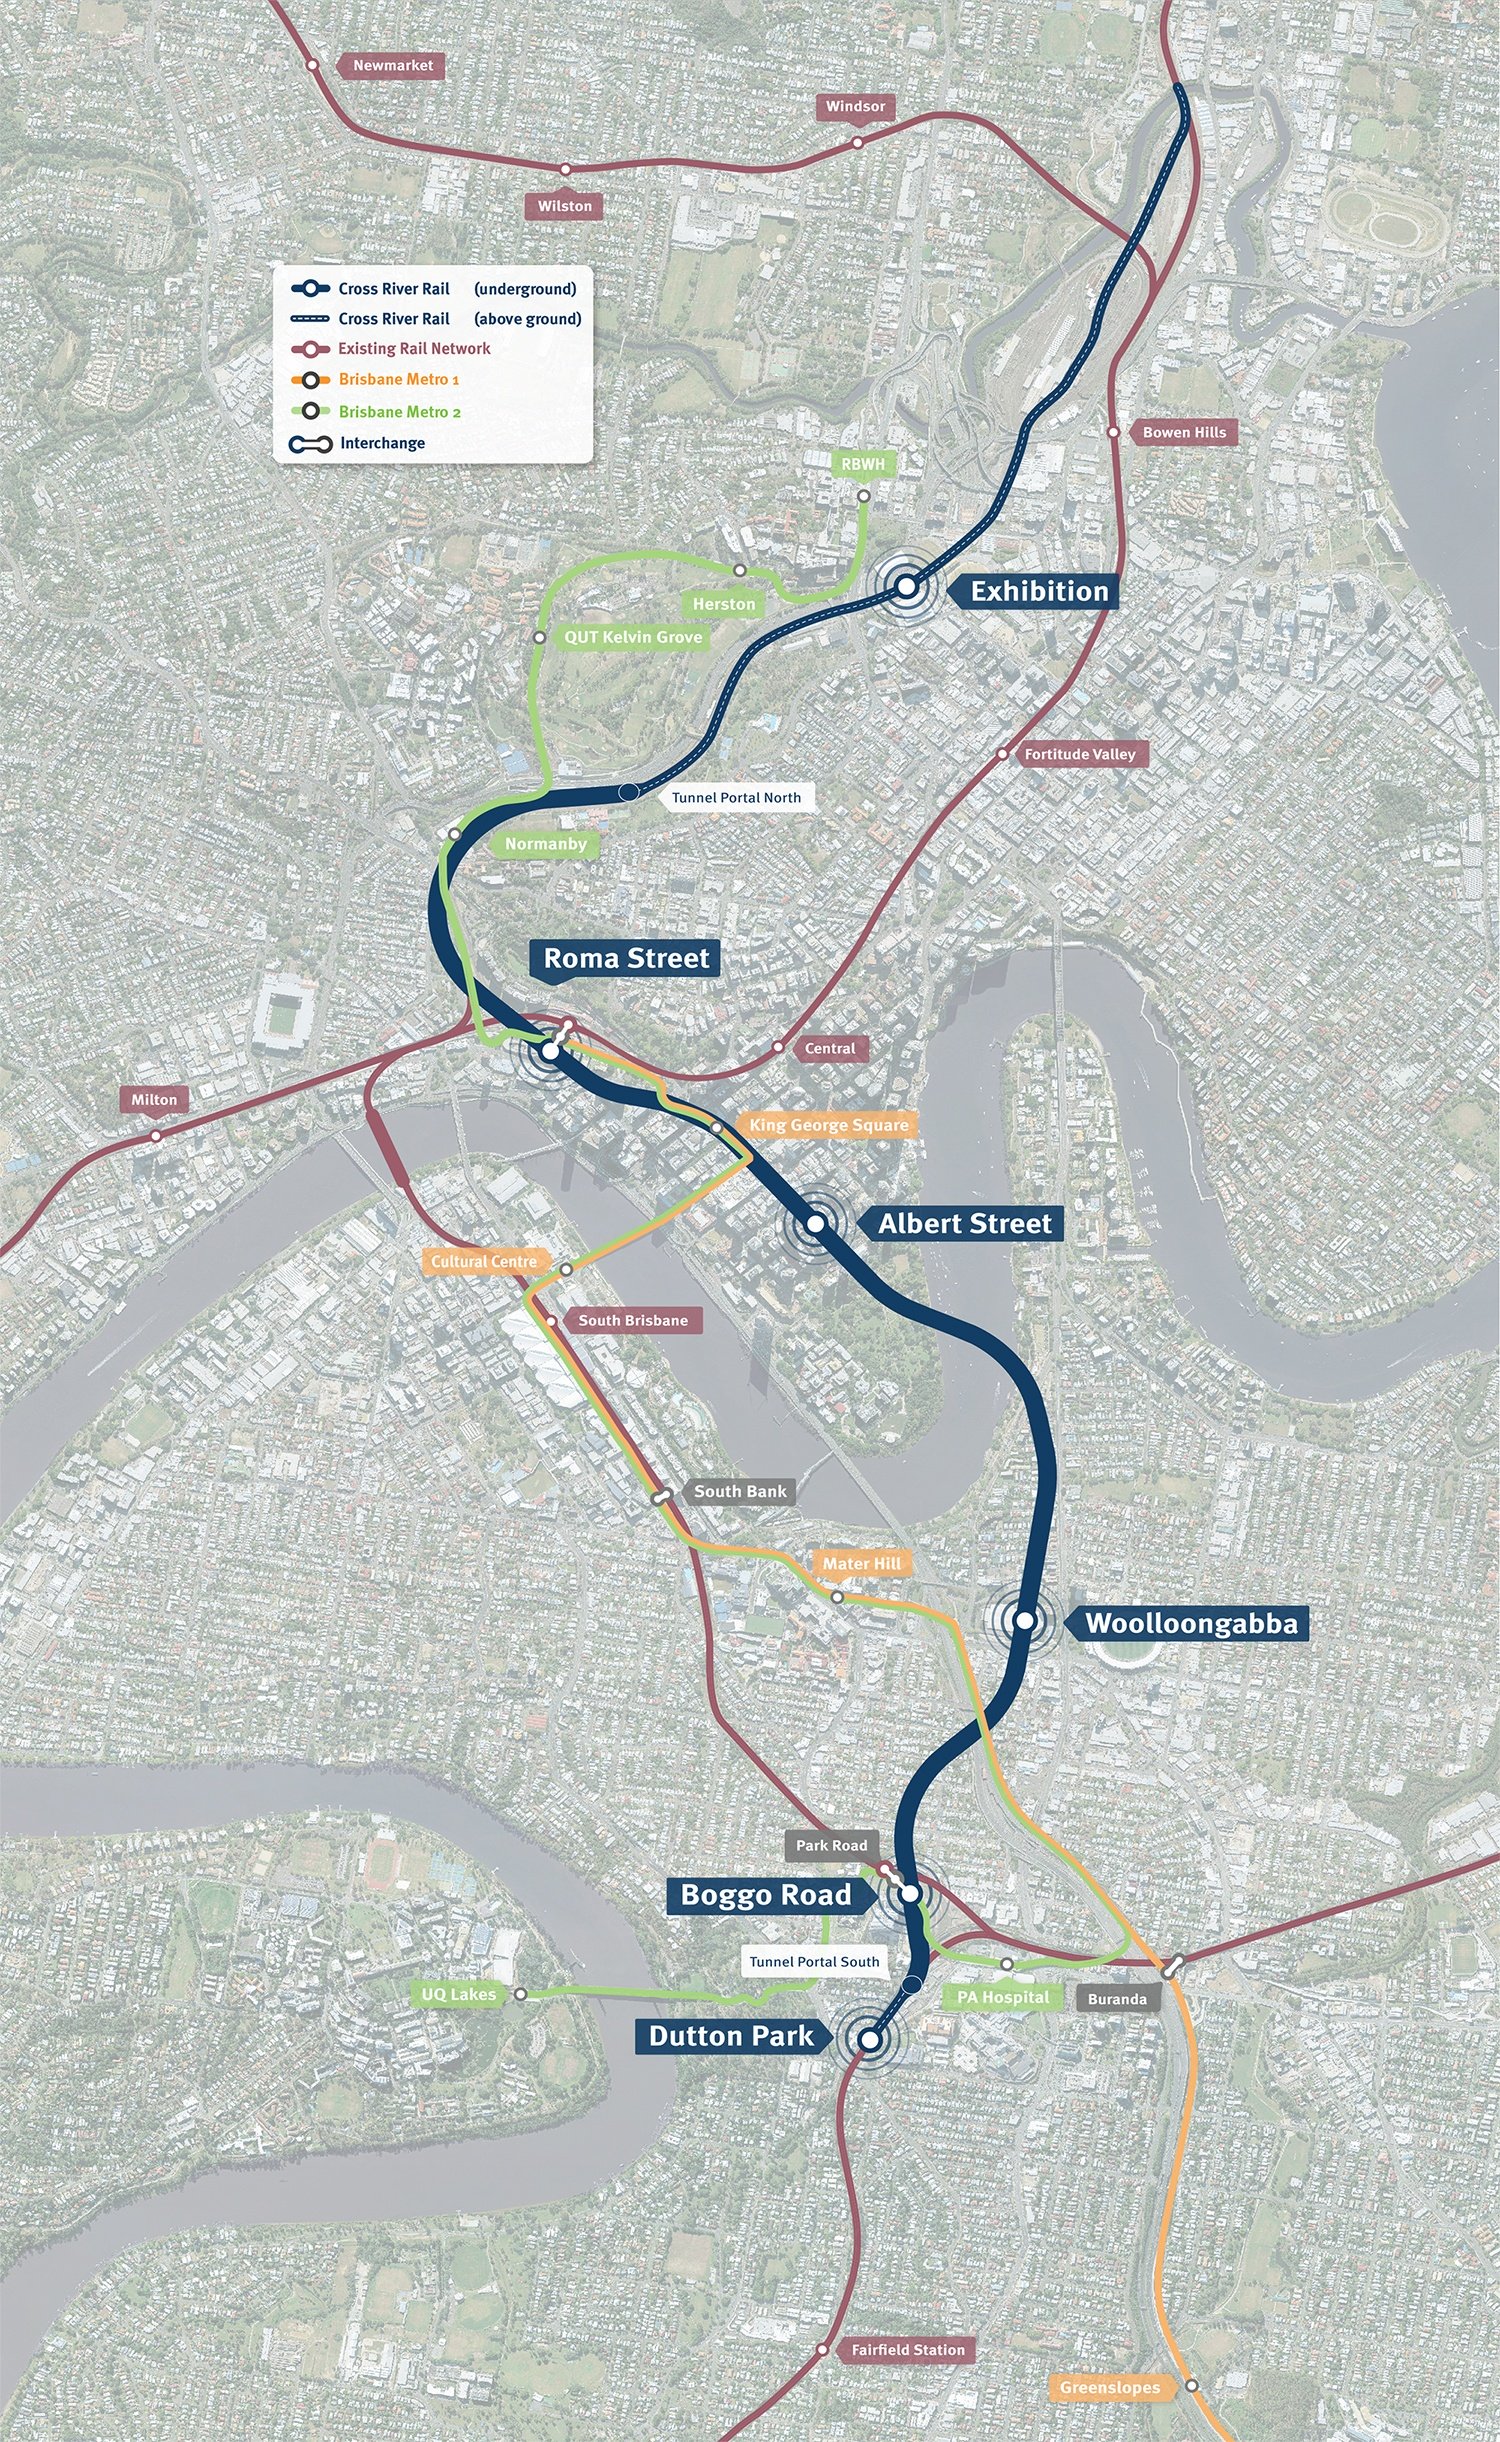 cross-river-rail-map